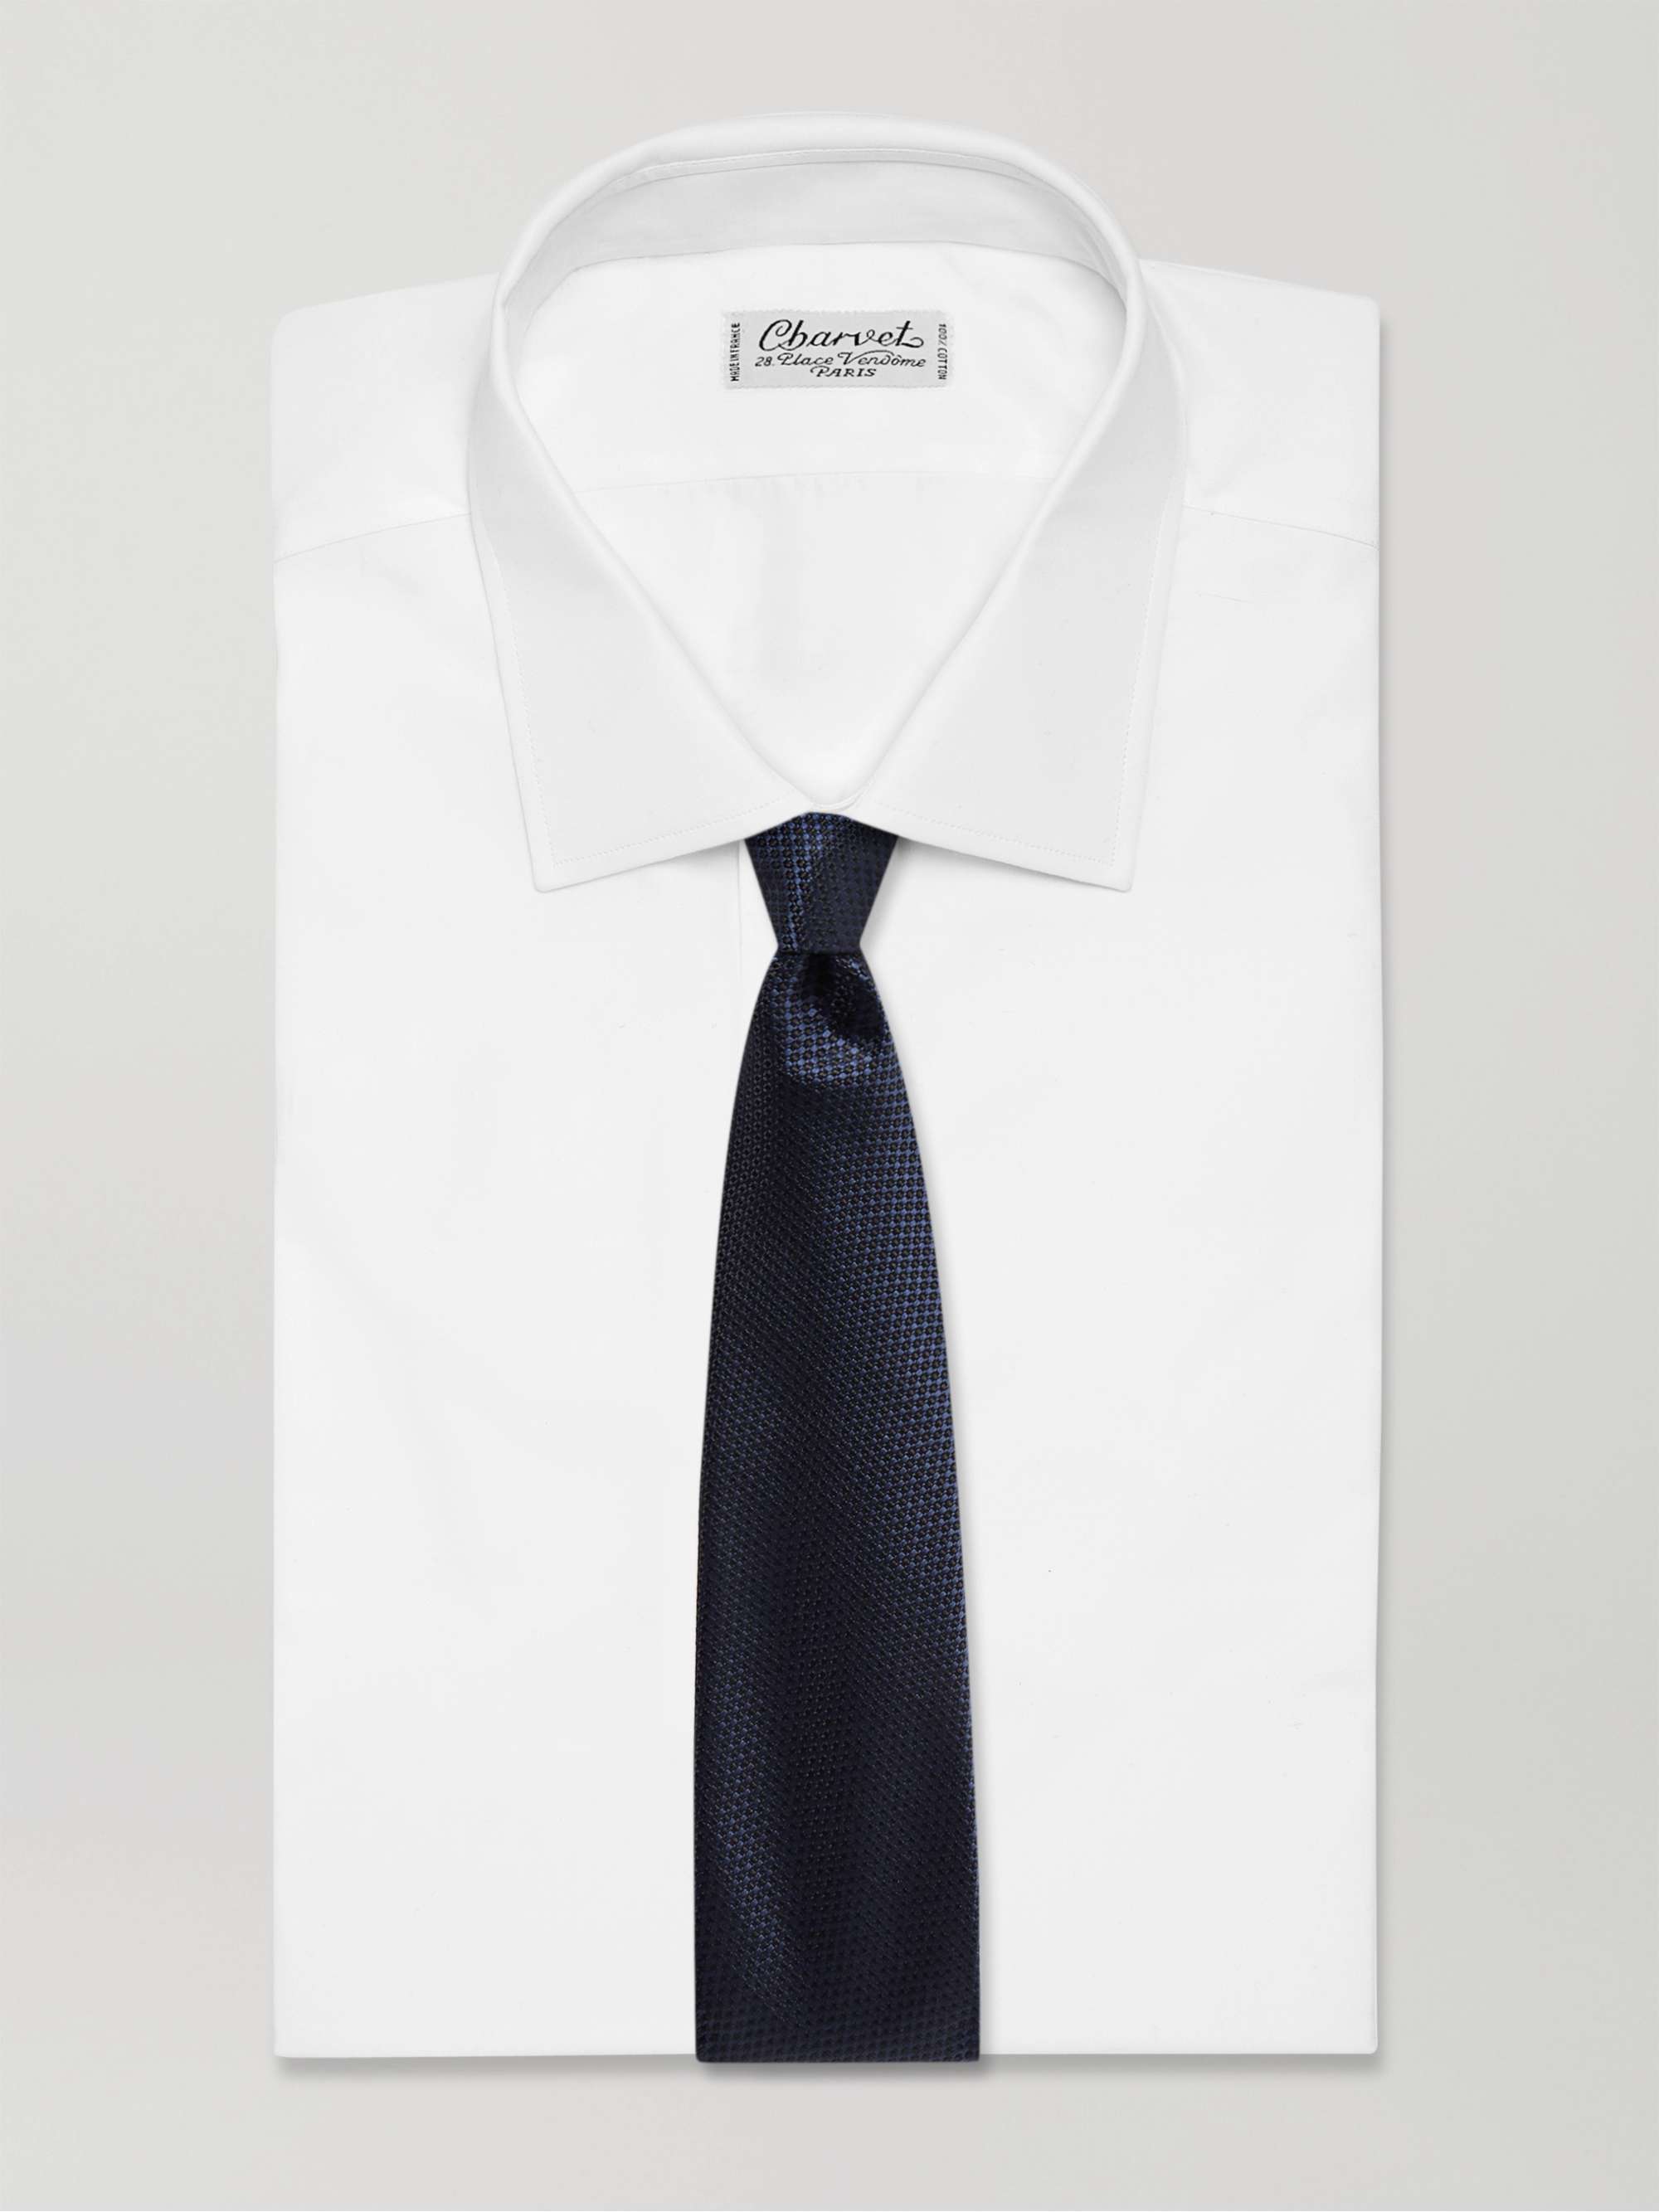 TOM FORD 8cm Silk-Jacquard Tie for Men | MR PORTER